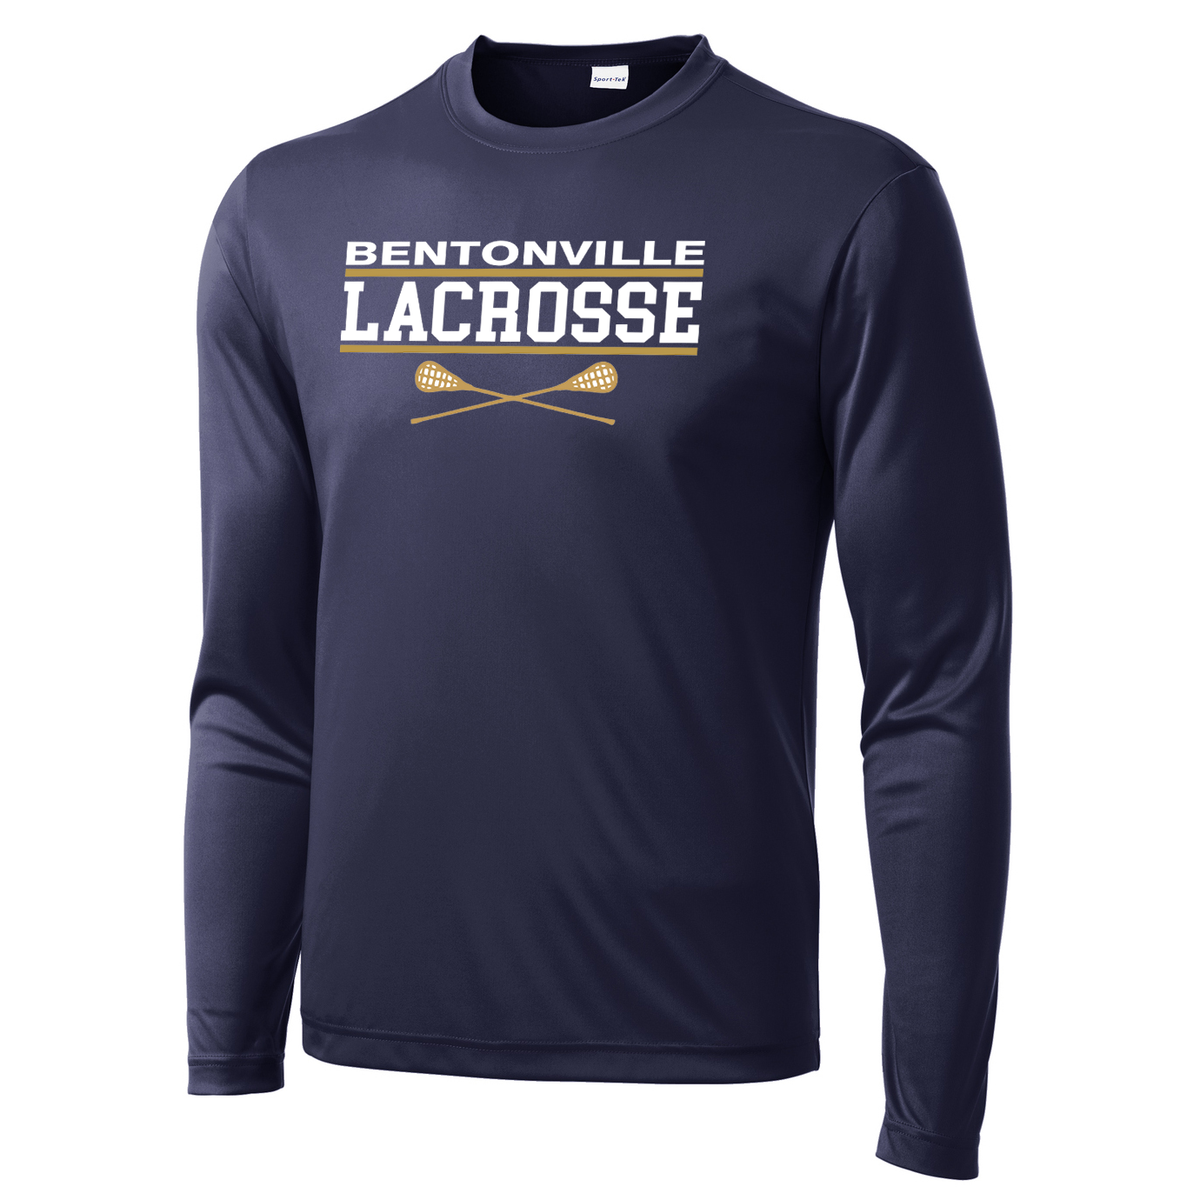 Bentonville Lacrosse Long Sleeve Performance Shirt